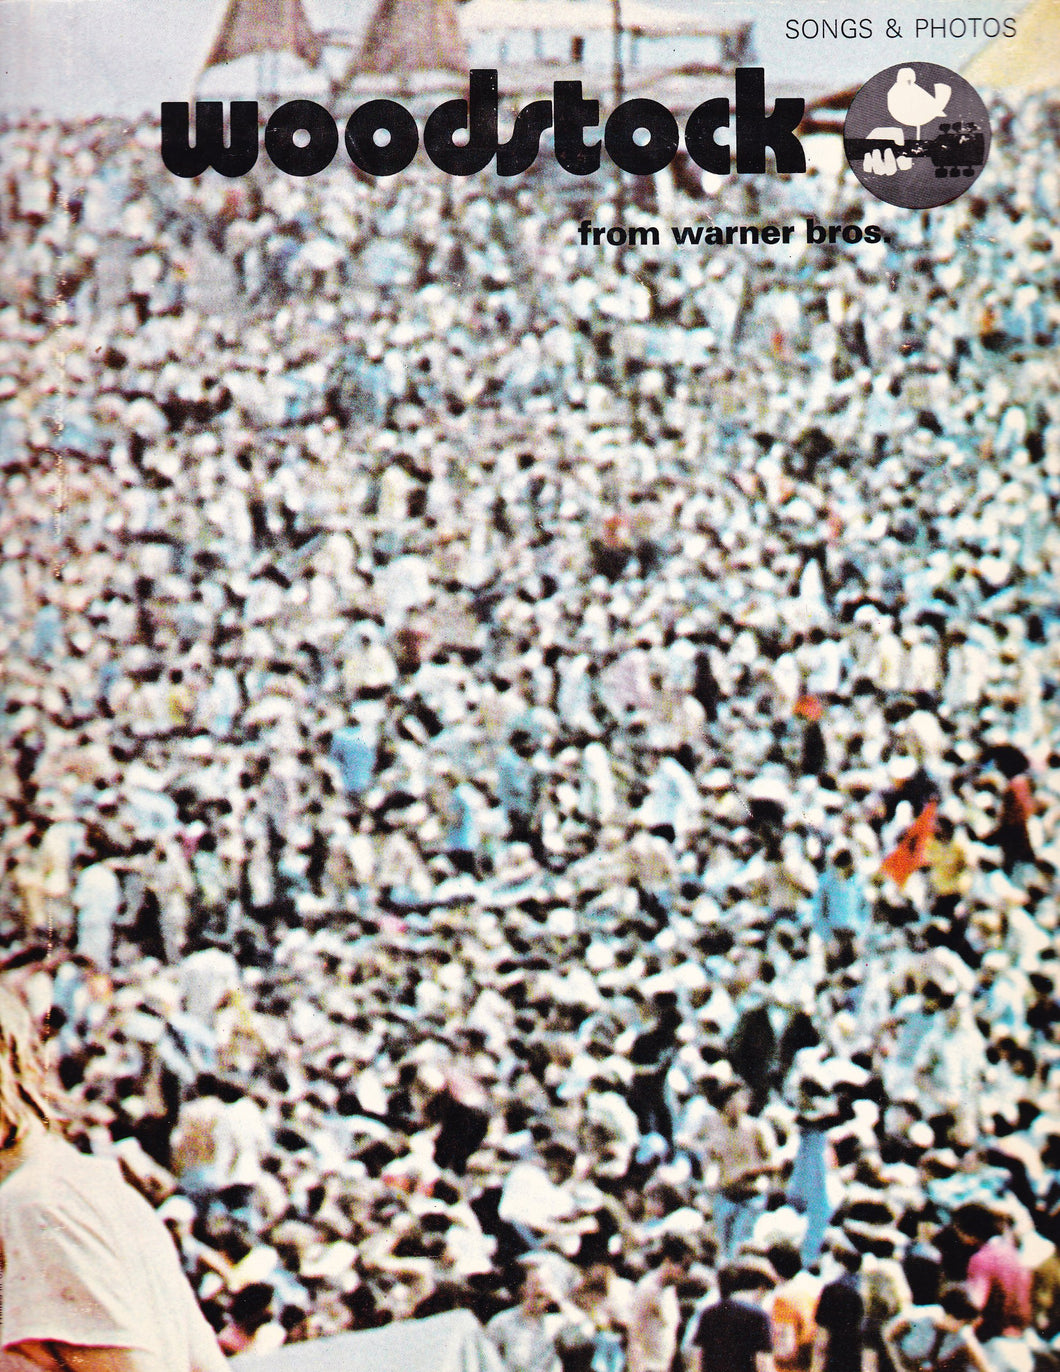 Woodstock: Songs & Photos